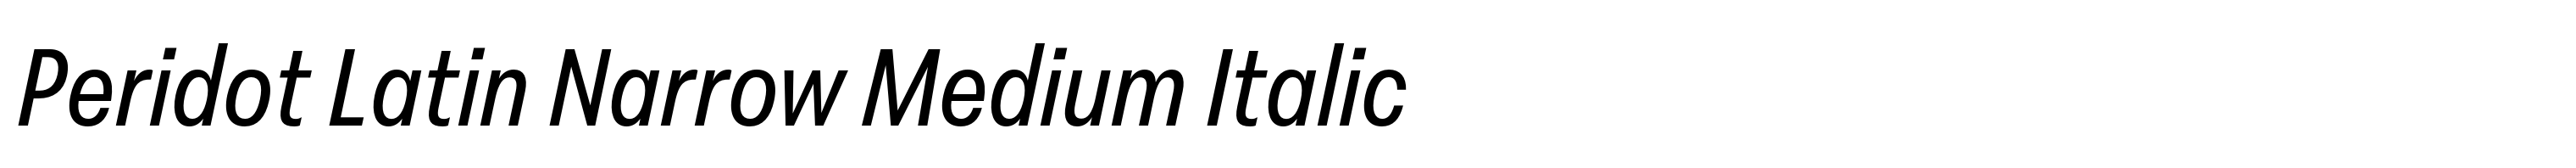 Peridot Latin Narrow Medium Italic